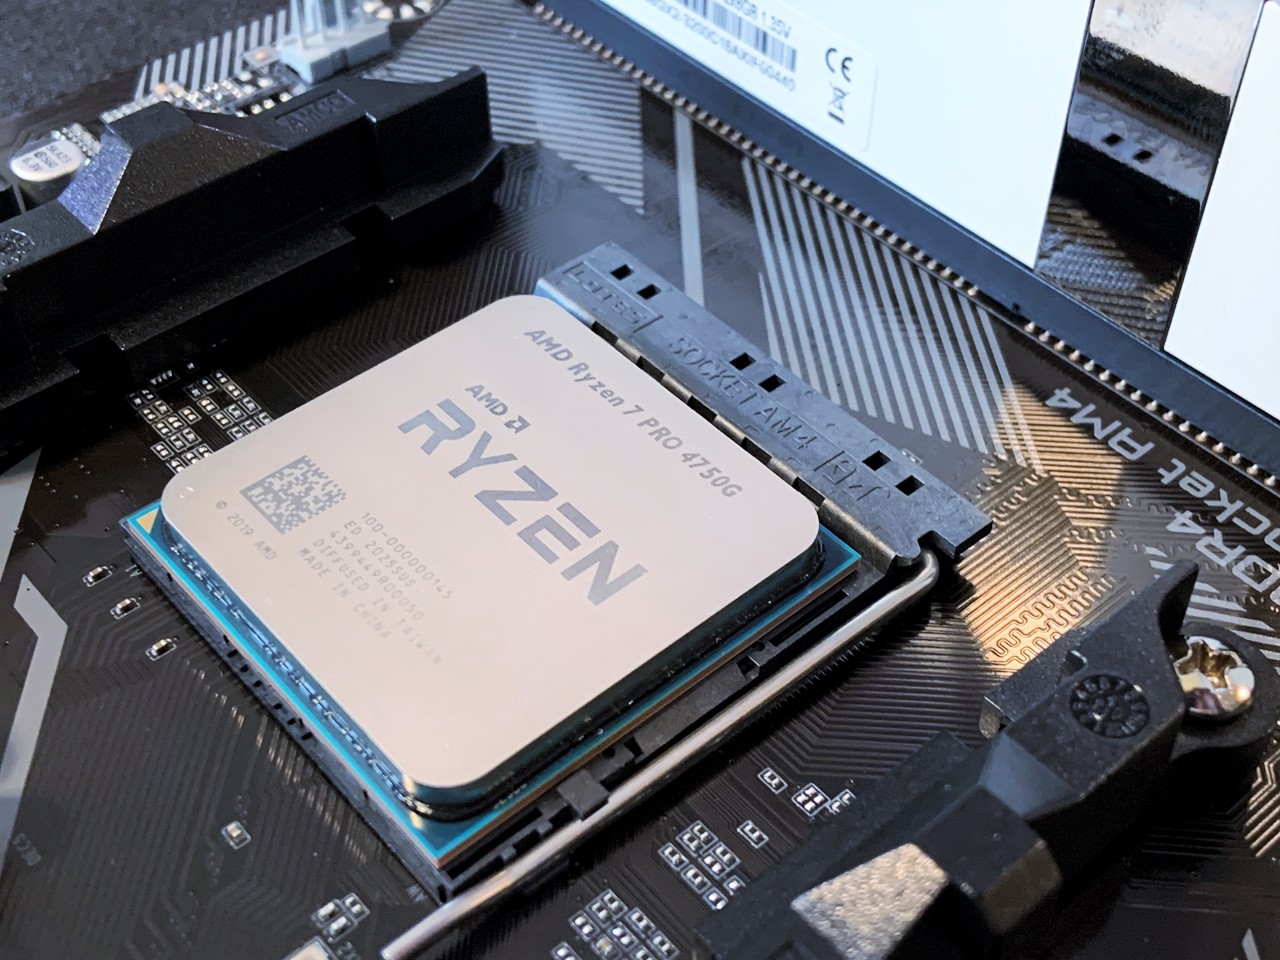 AMD Ryzen 7 PRO 4750G (Renoir) Processor Review - Page 4 of 5 - AMD3D